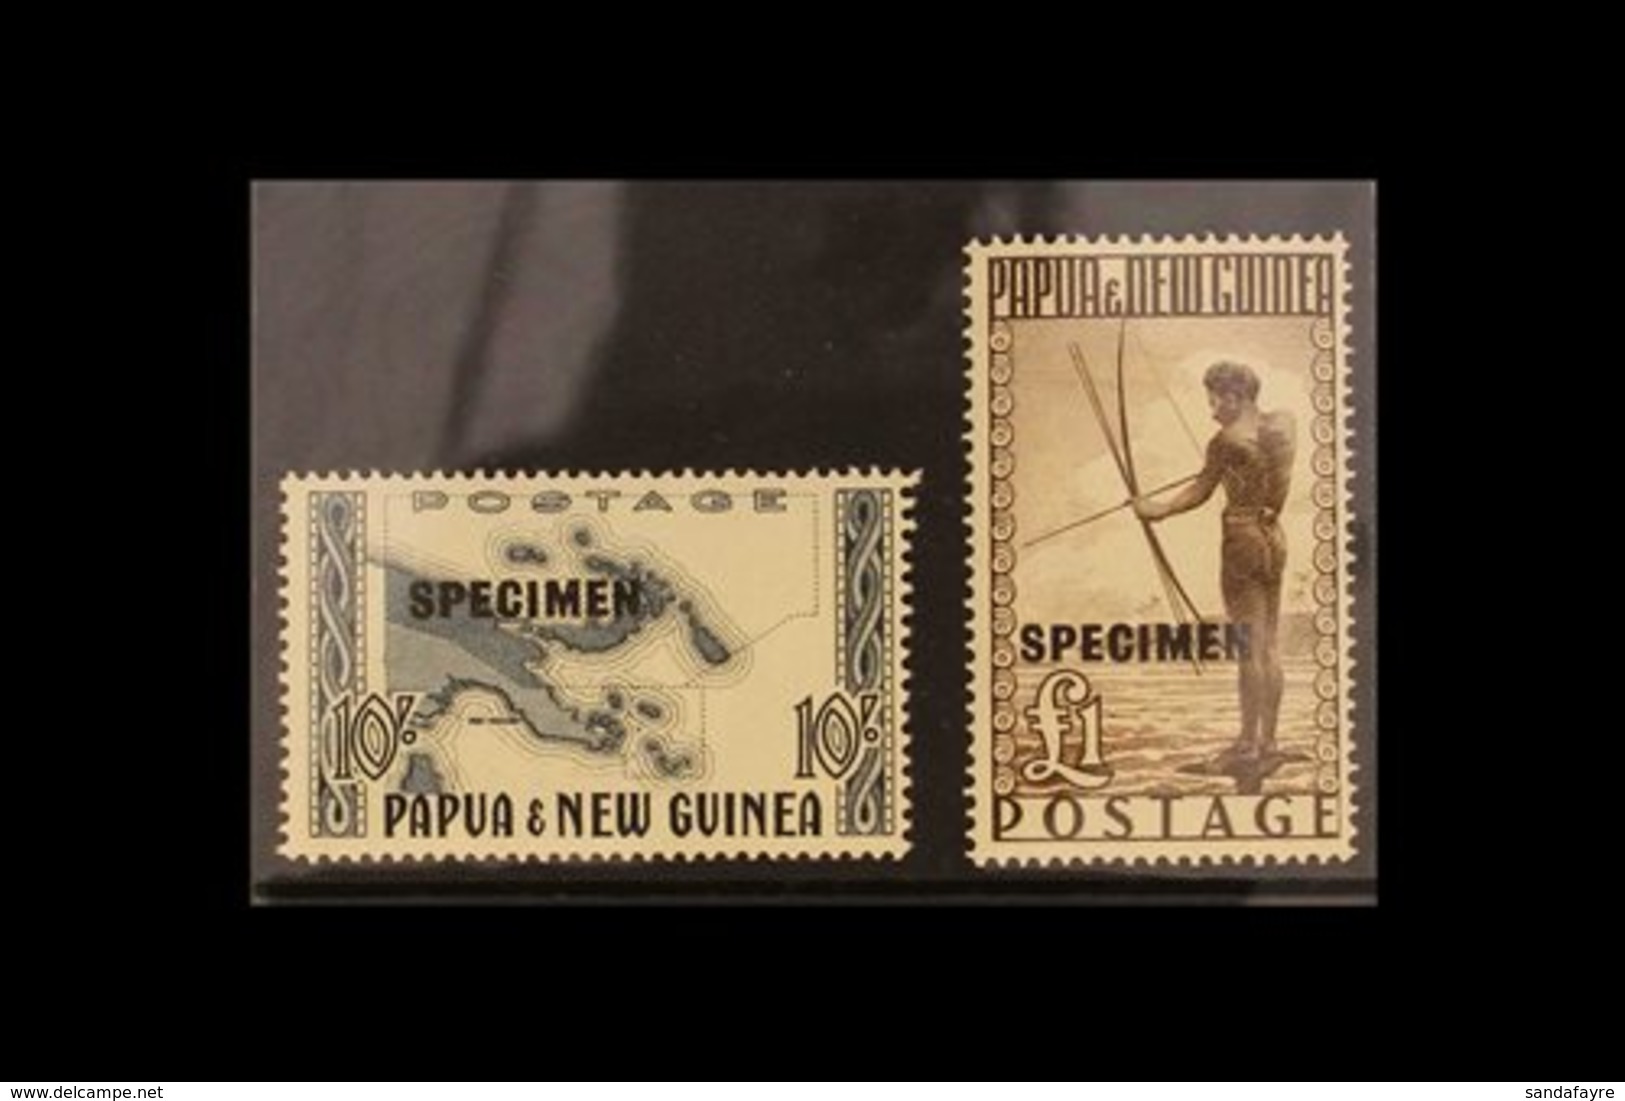 1952 10s Blue-black And £1 Deep Brown Overprinted "SPECIMEN", SG 14s/15s, For More Images, Please Visit Http://www.sanda - Papúa Nueva Guinea